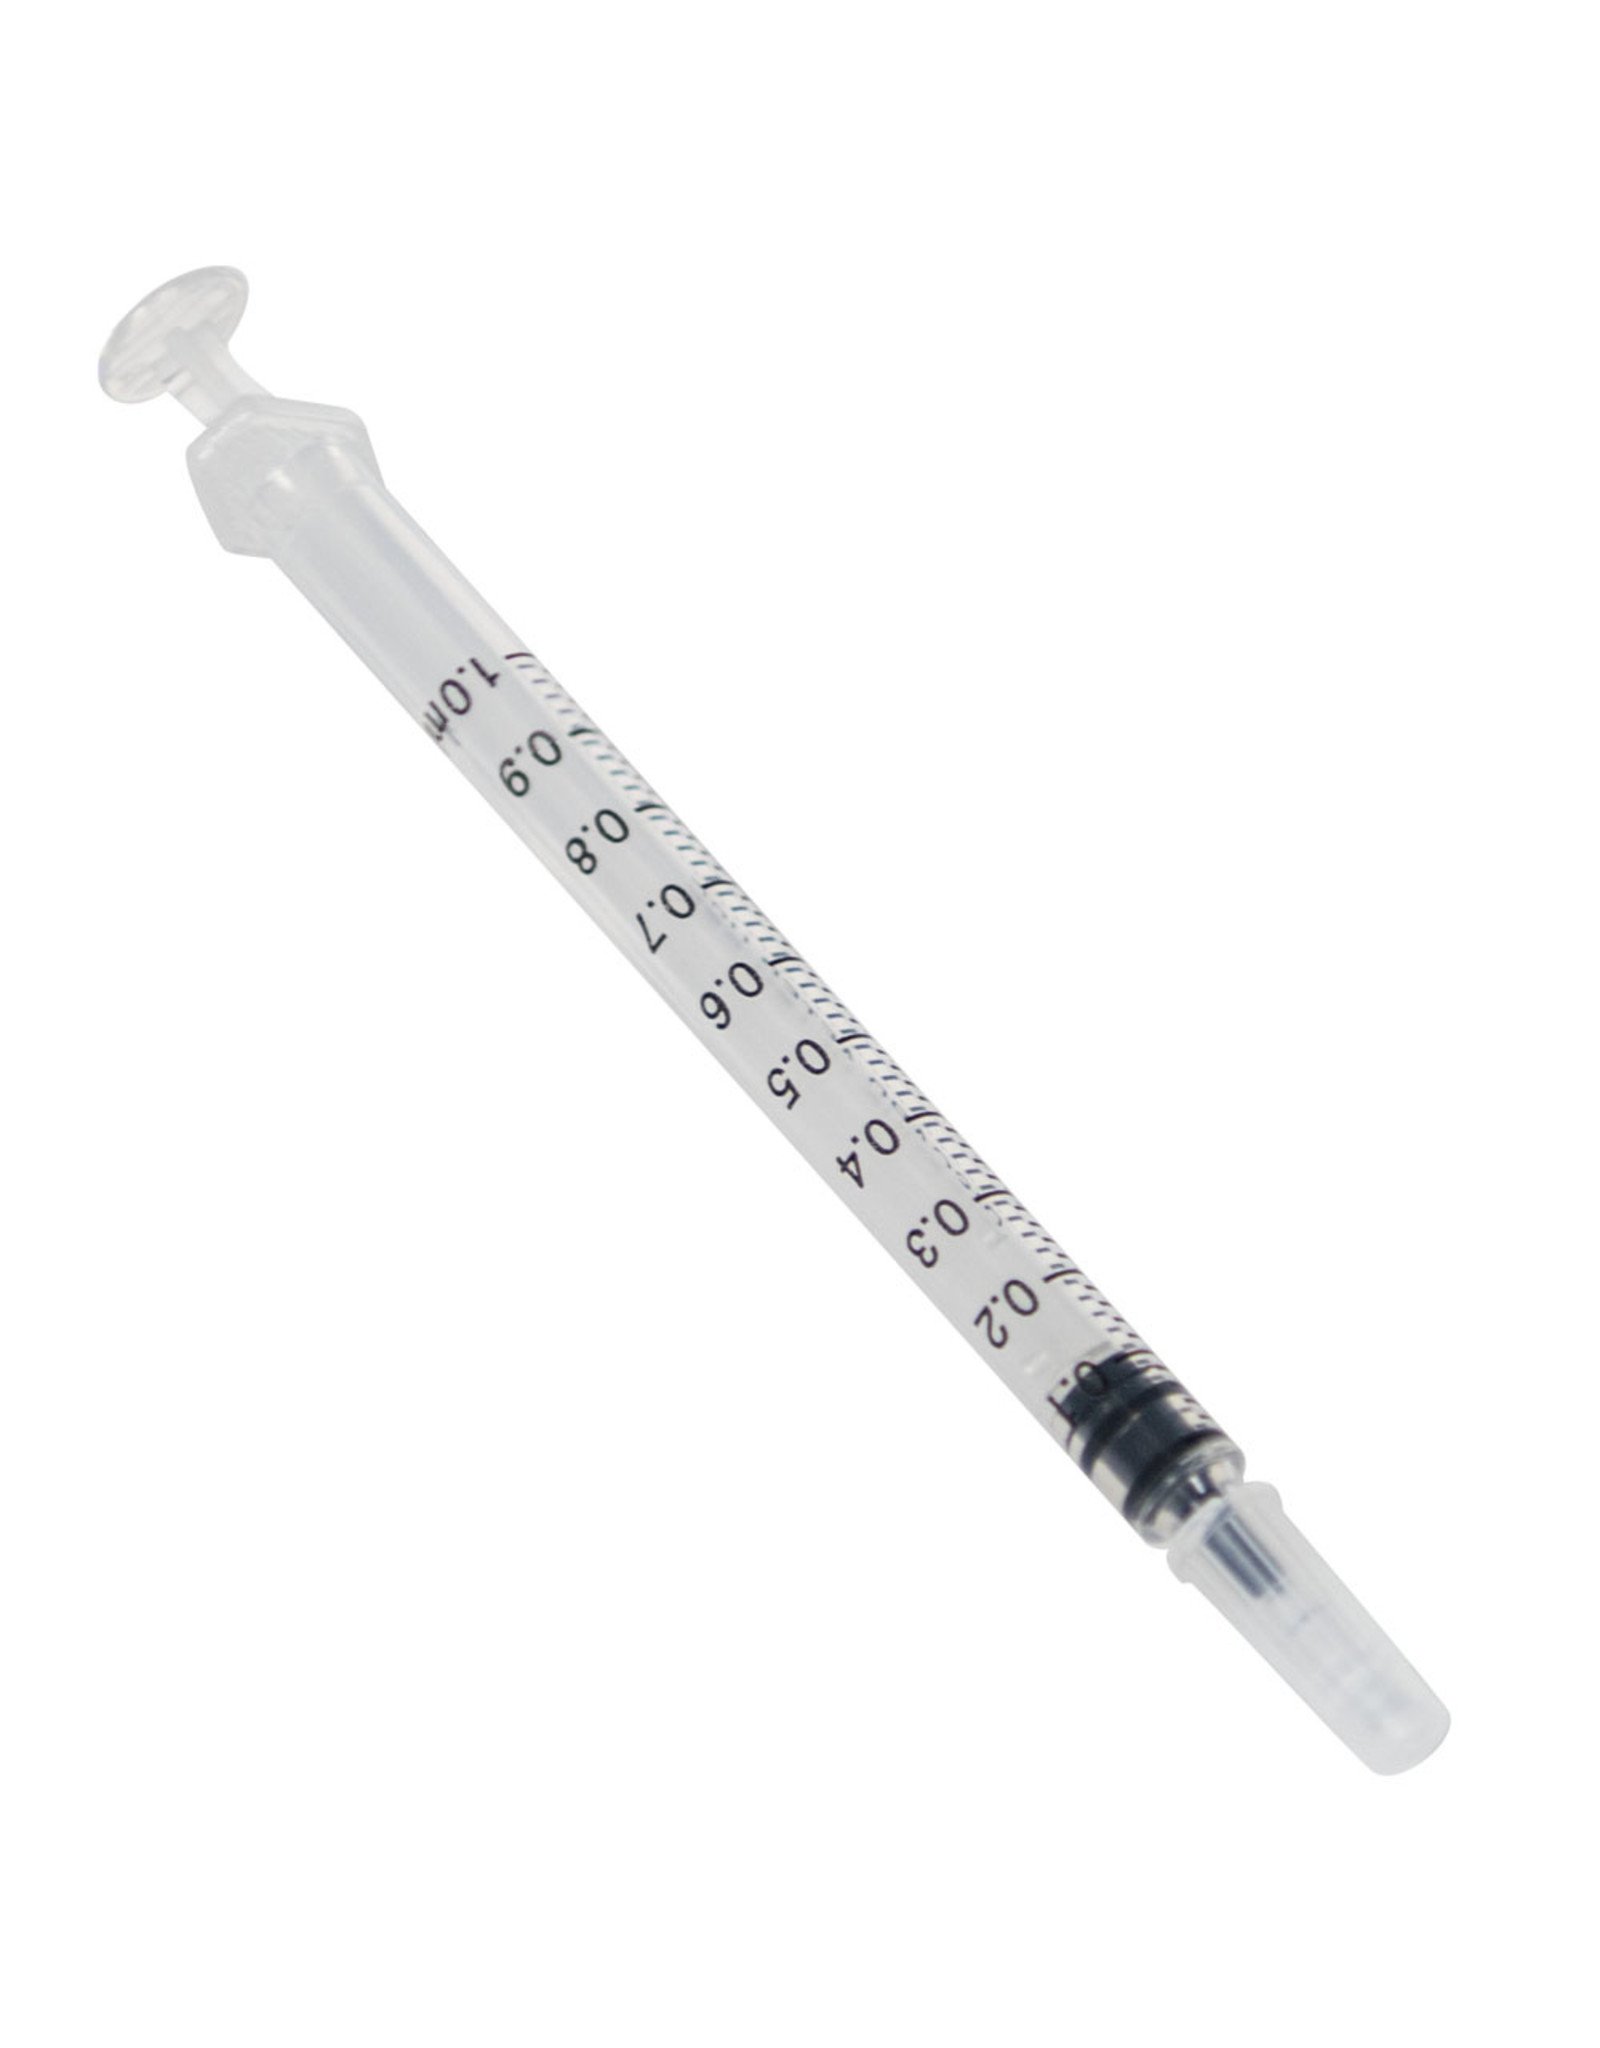 Measuring Syringe 1 ml/cc